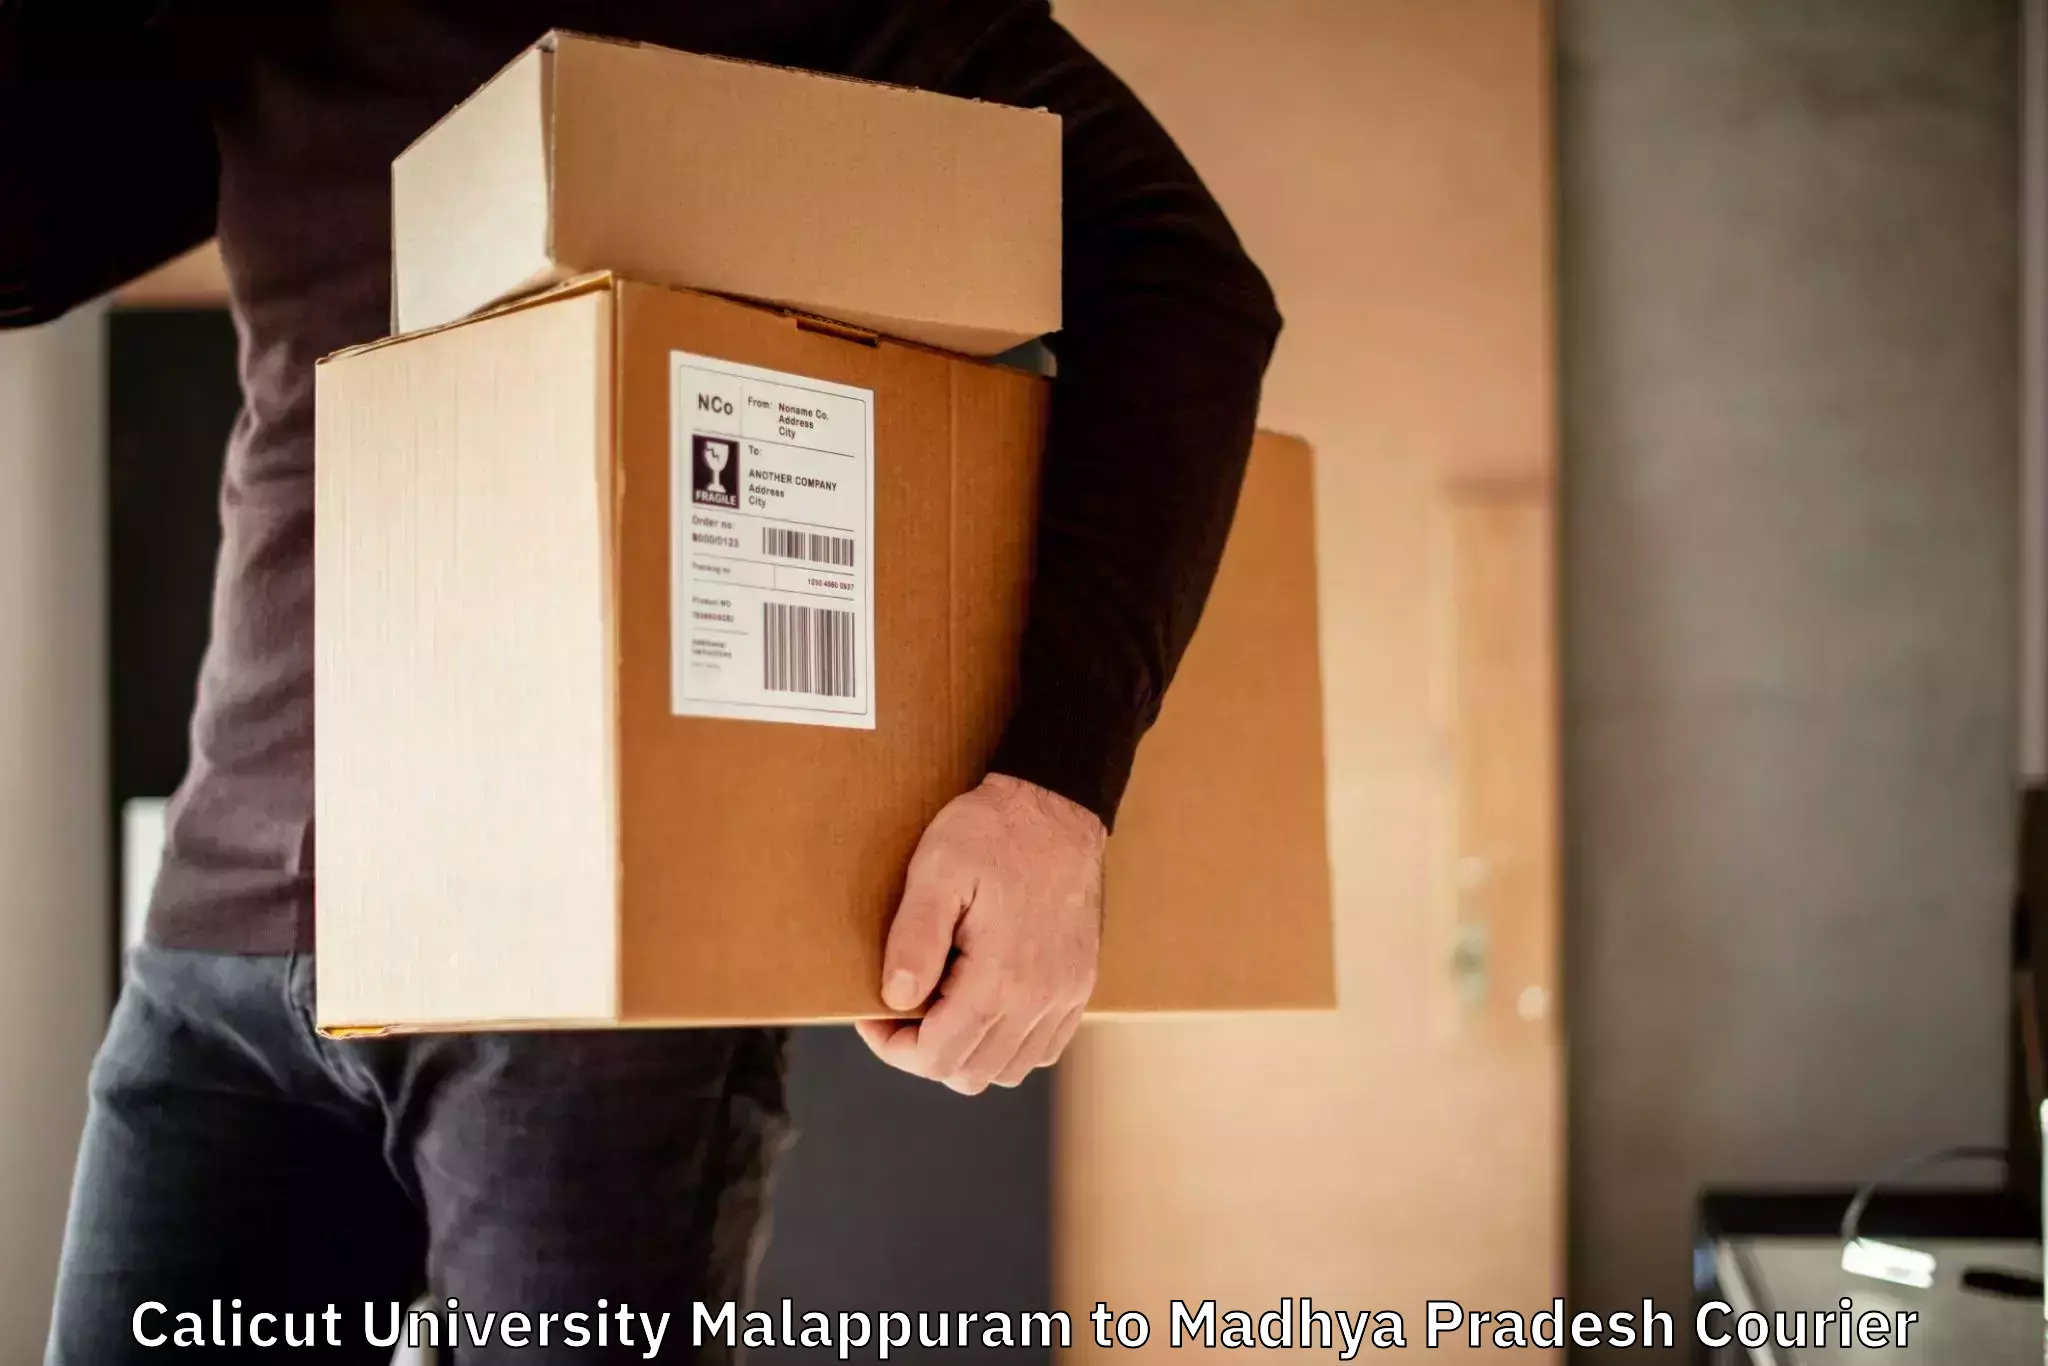 Pharmaceutical courier Calicut University Malappuram to IIT Indore